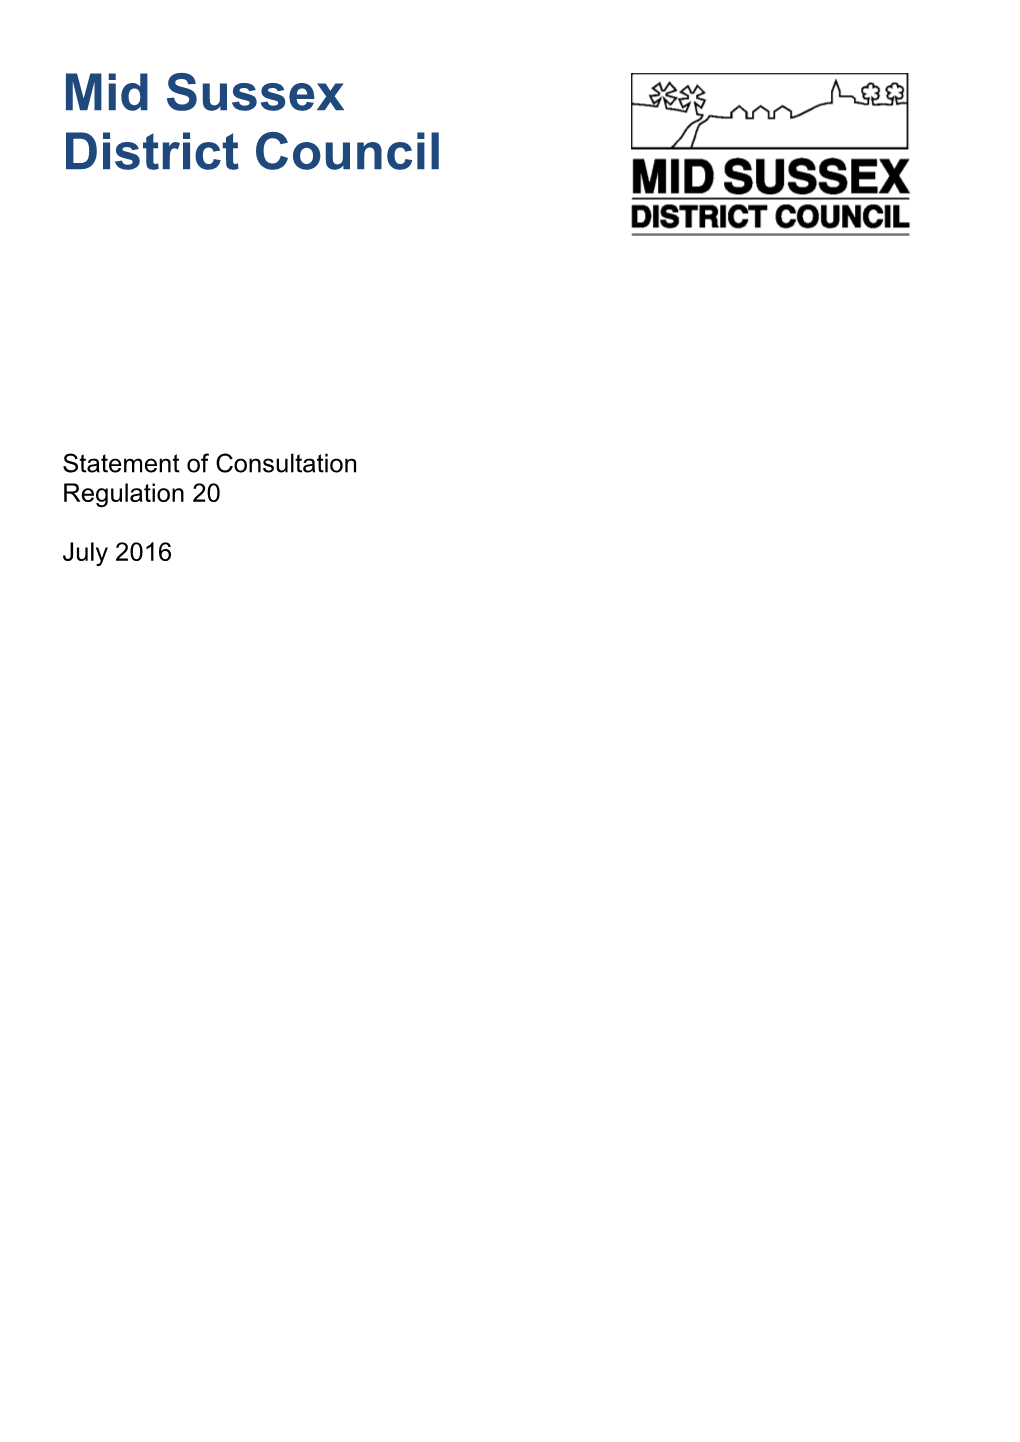 Statement of Consultation Regulation 20